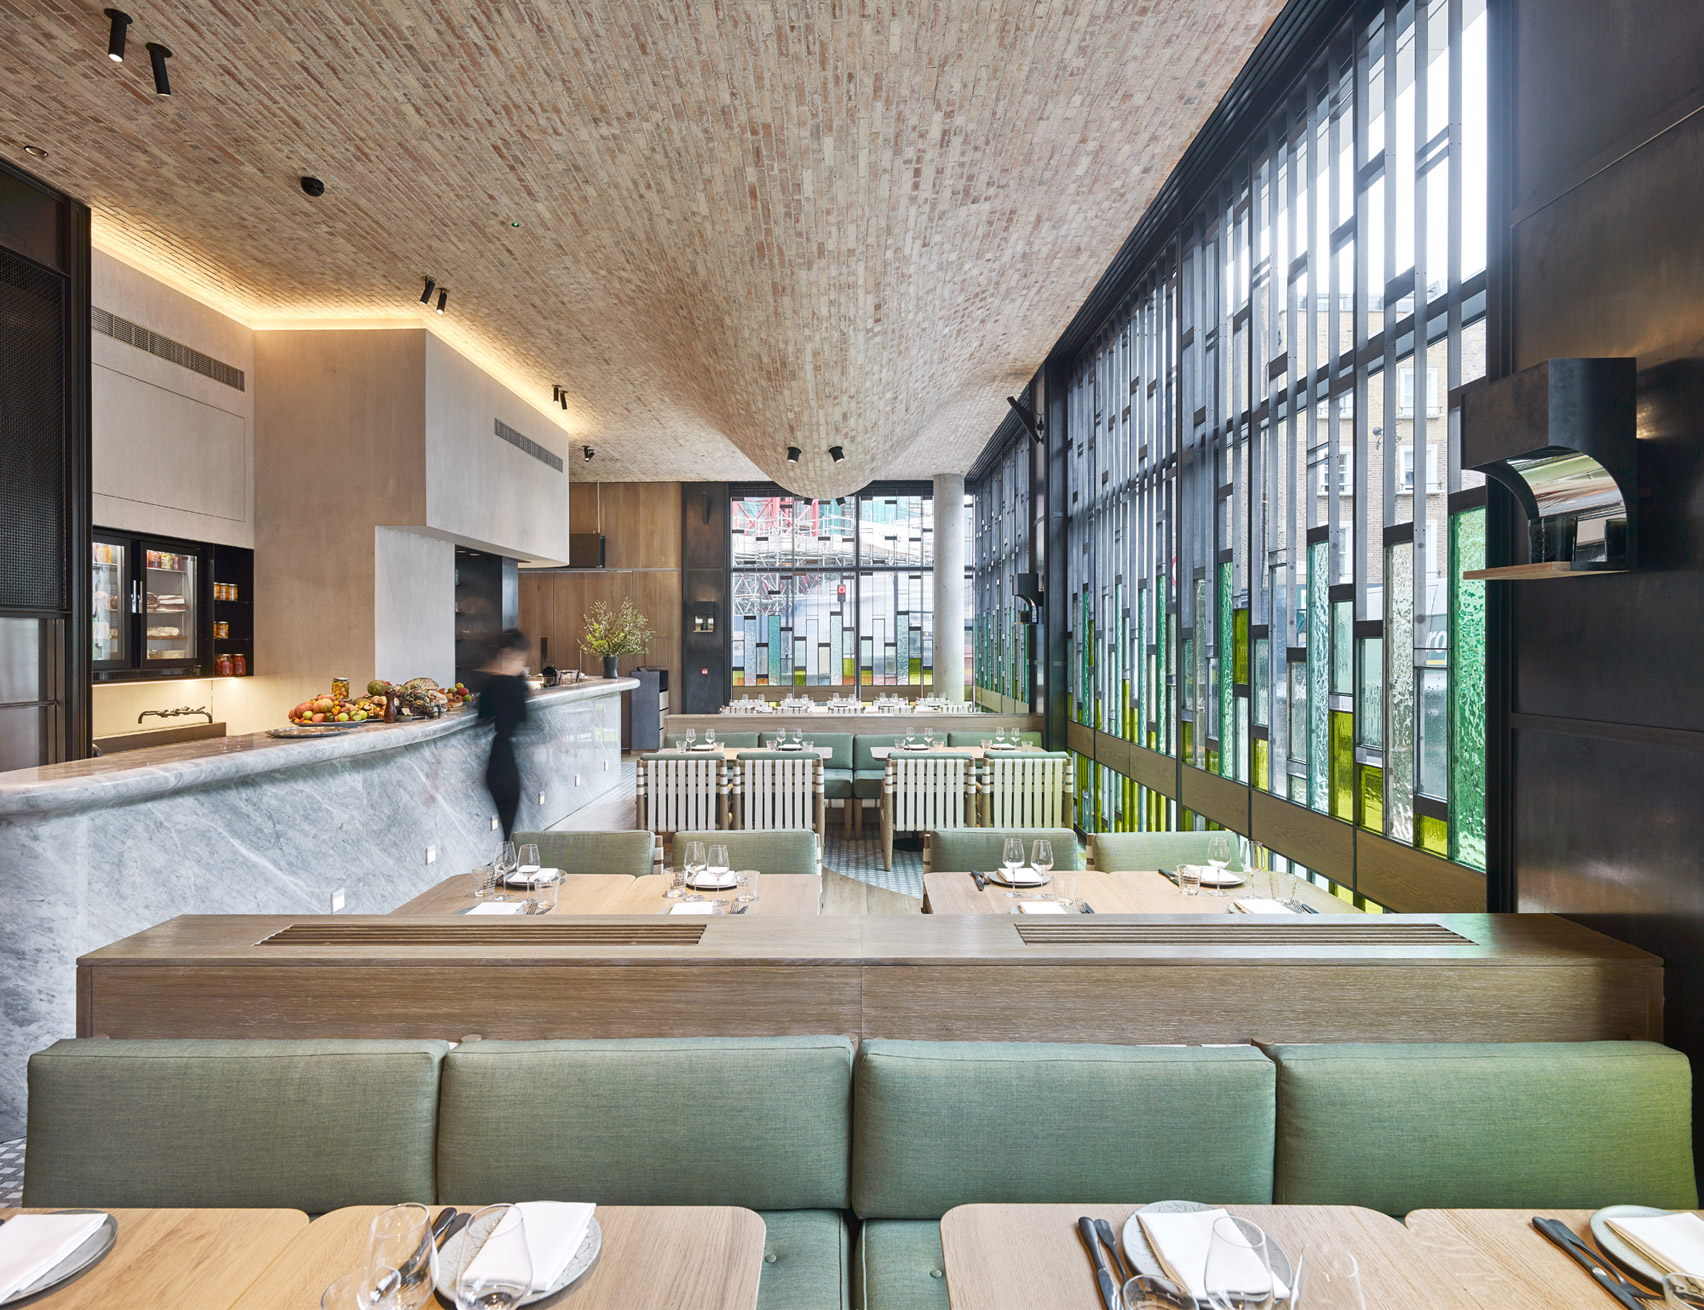 fucina-restaurant-andy-martin-architecture-interiors-london_dezeen_1704_col_8